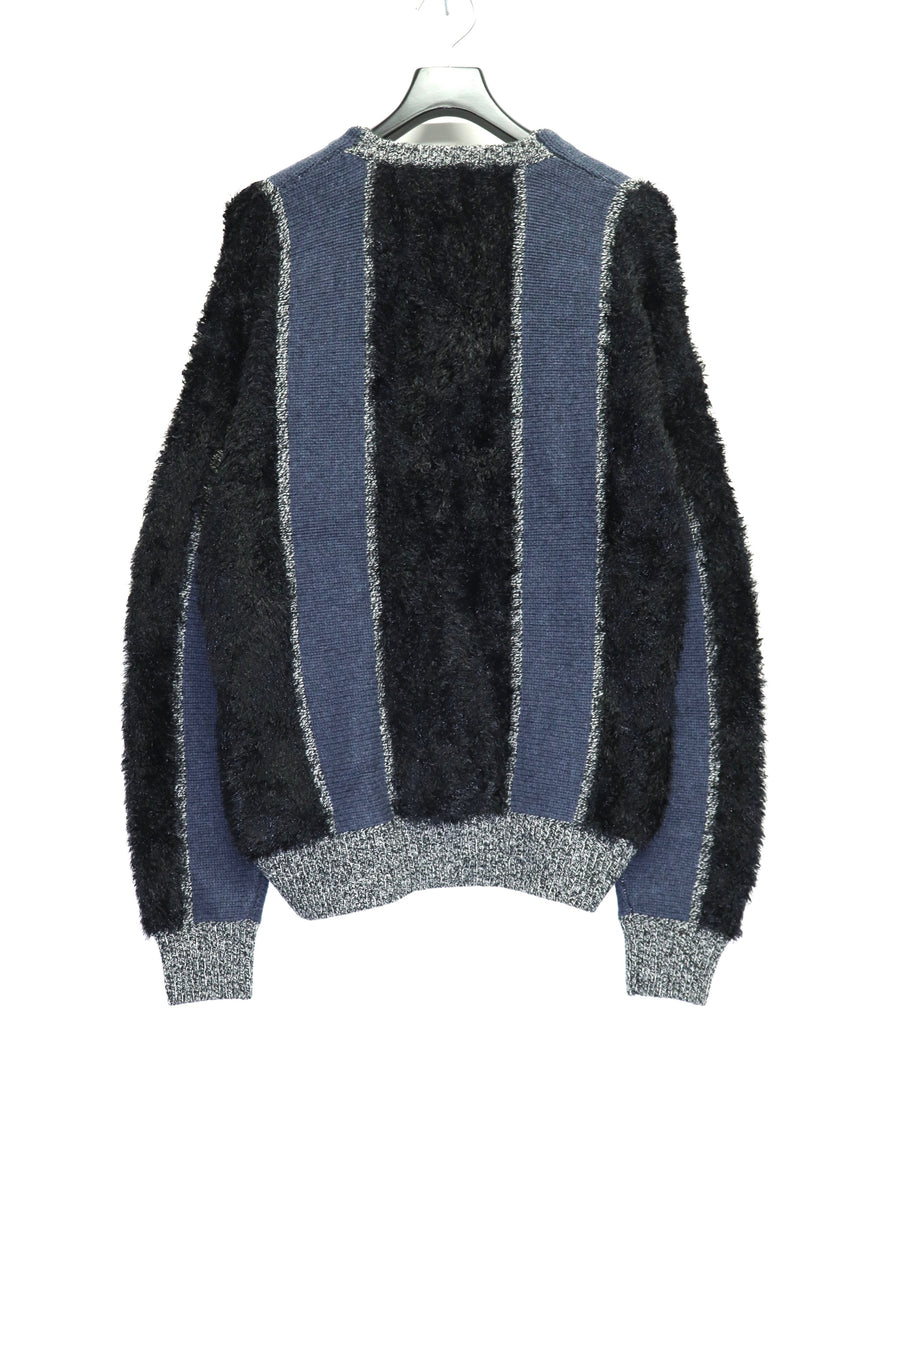 TOGA VIRILIS(トーガ ビリリース)のStripe knit cardigan NAVYの通販 